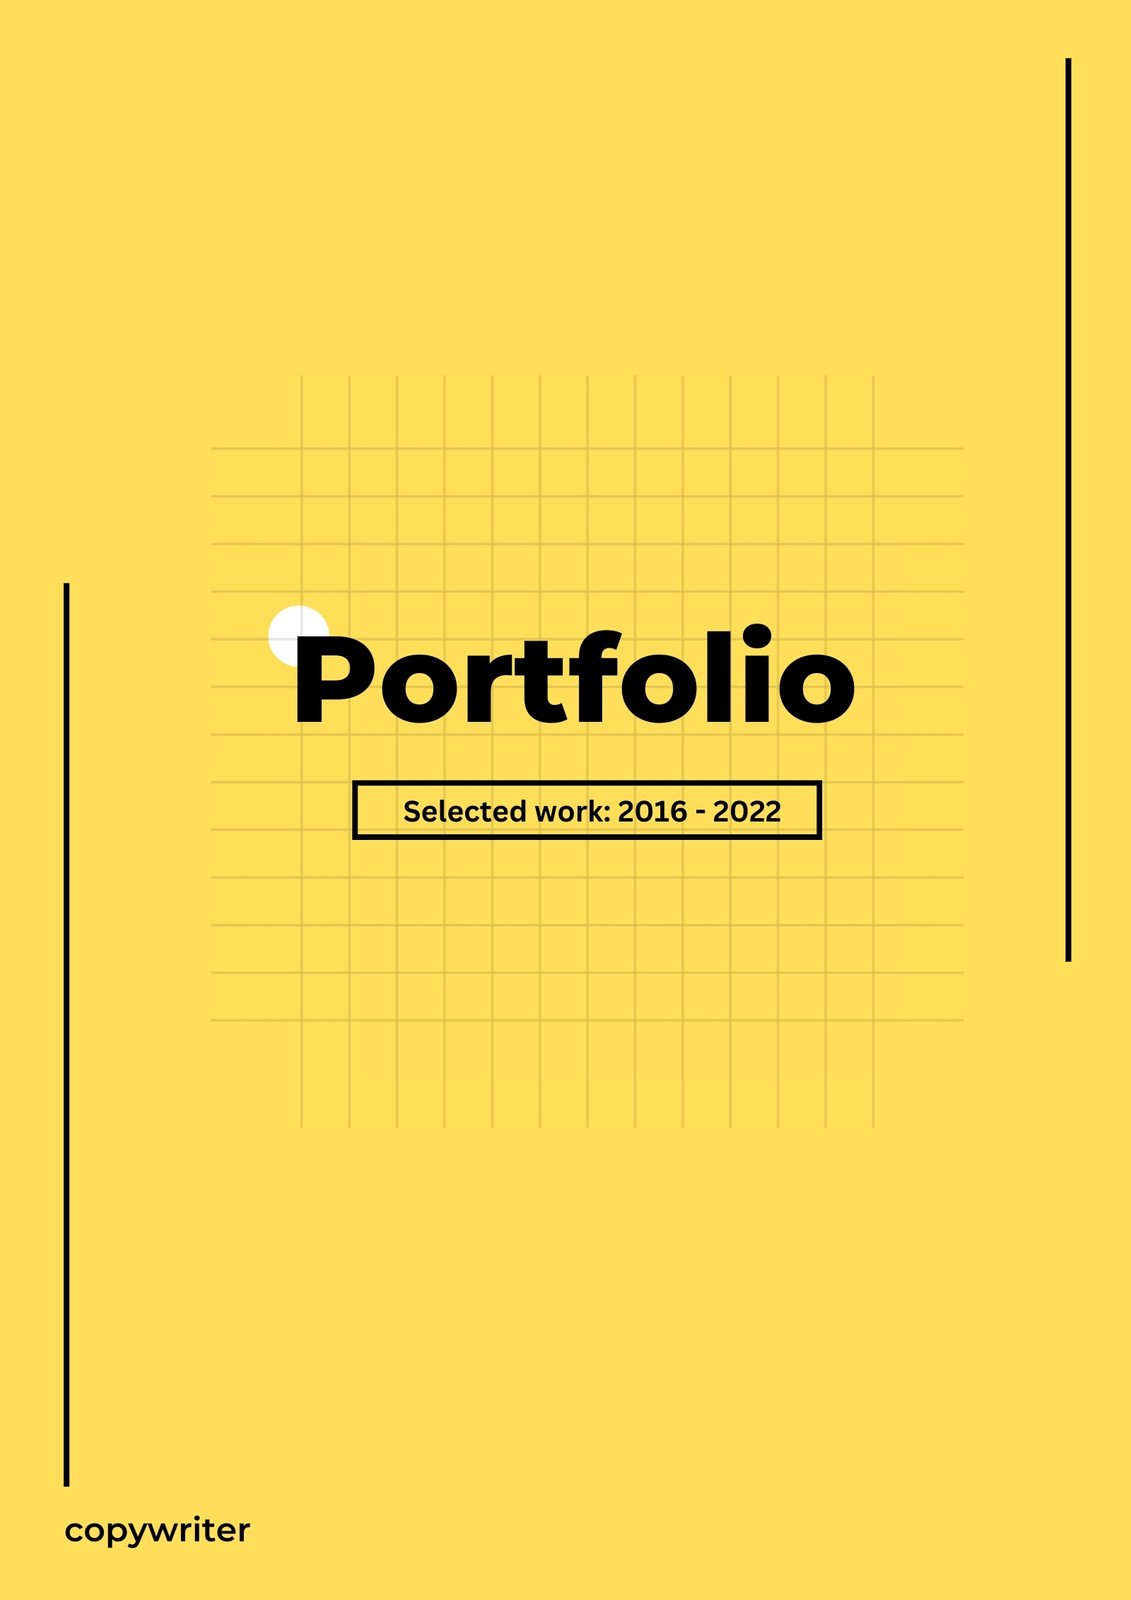 Canva Yellow Minimalist Portfolio Cover Document VKyzxttIaU0 